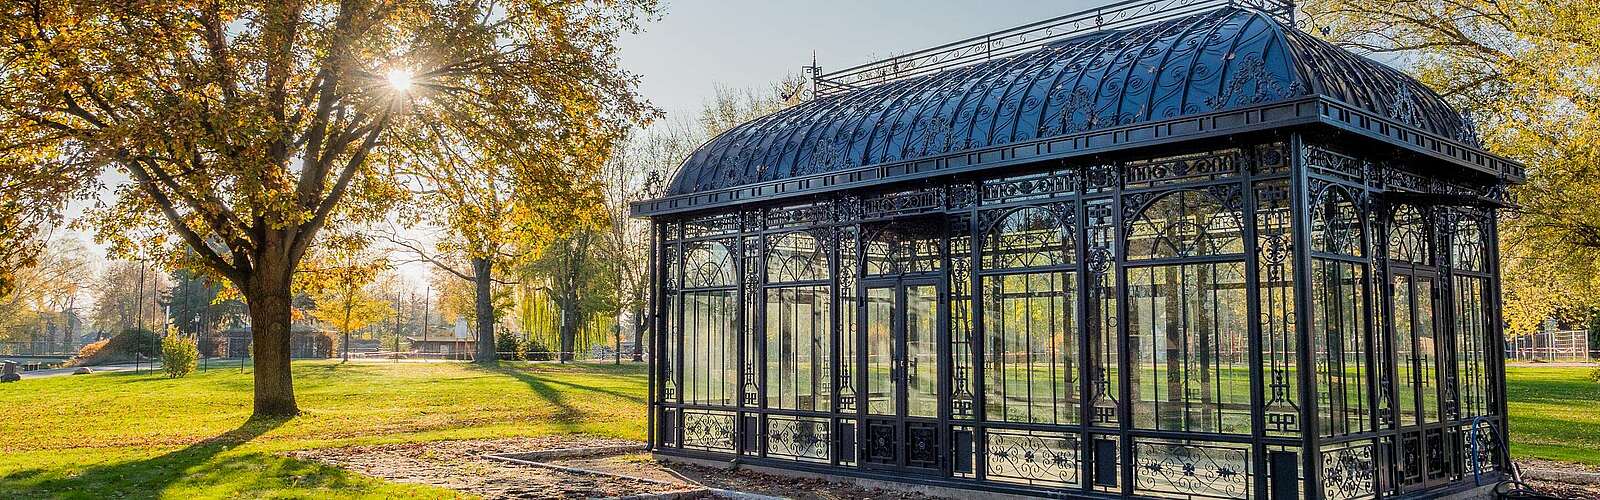 Beelitz Pavillon im Laga Park,
        
    

        Foto: Tourismusverband Fläming e.V./Herz an Hirn/Laura Schneider